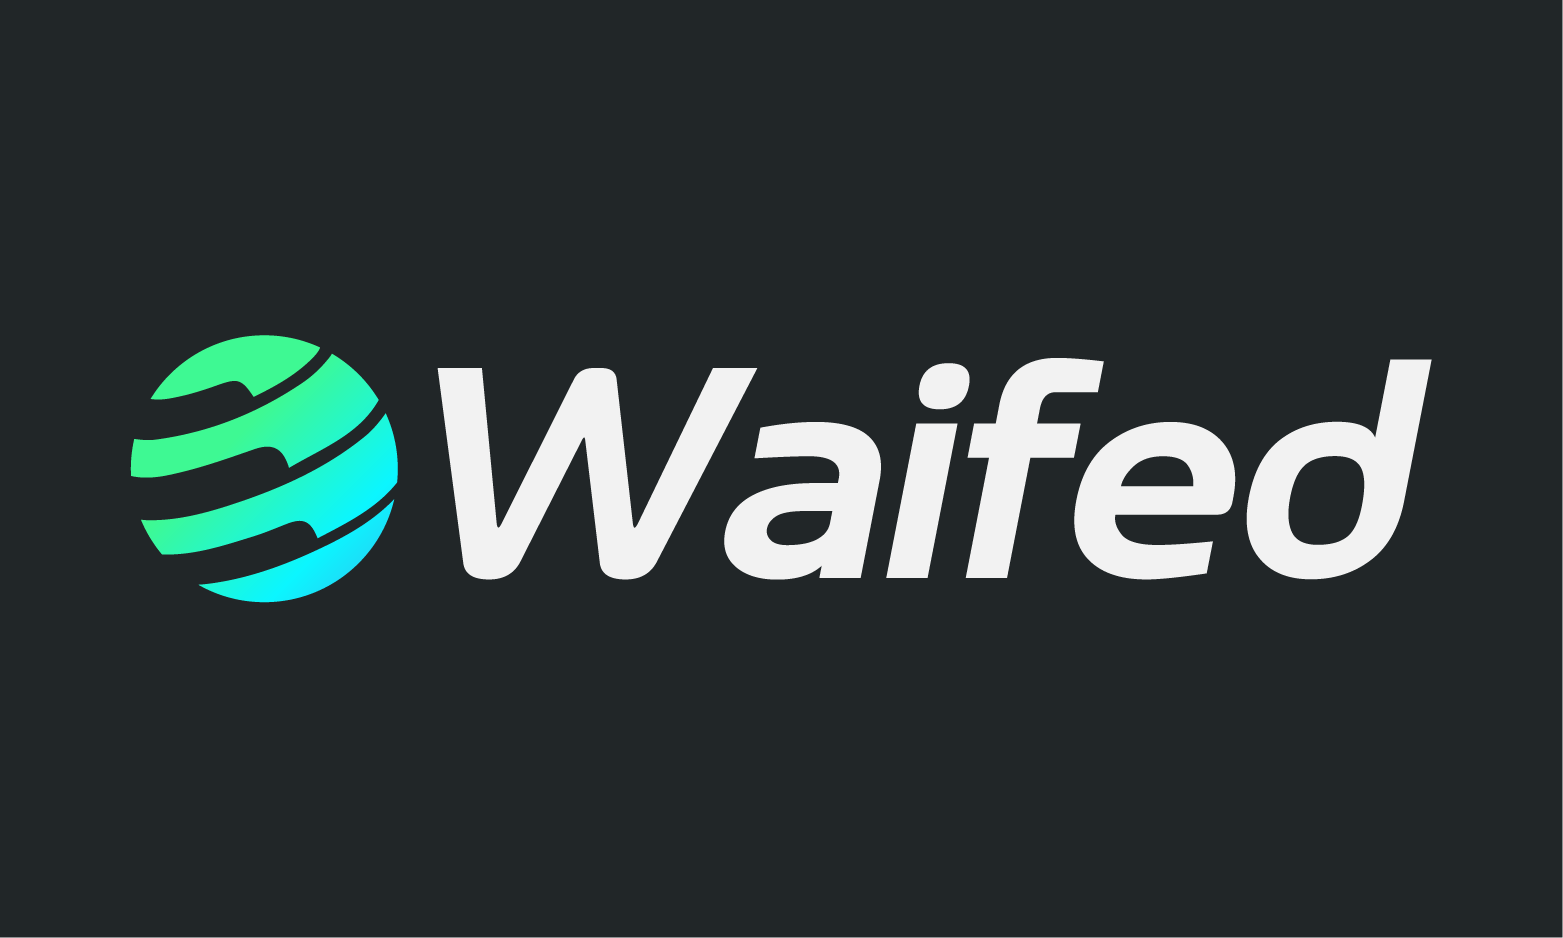 Waifed.com - Creative brandable domain for sale